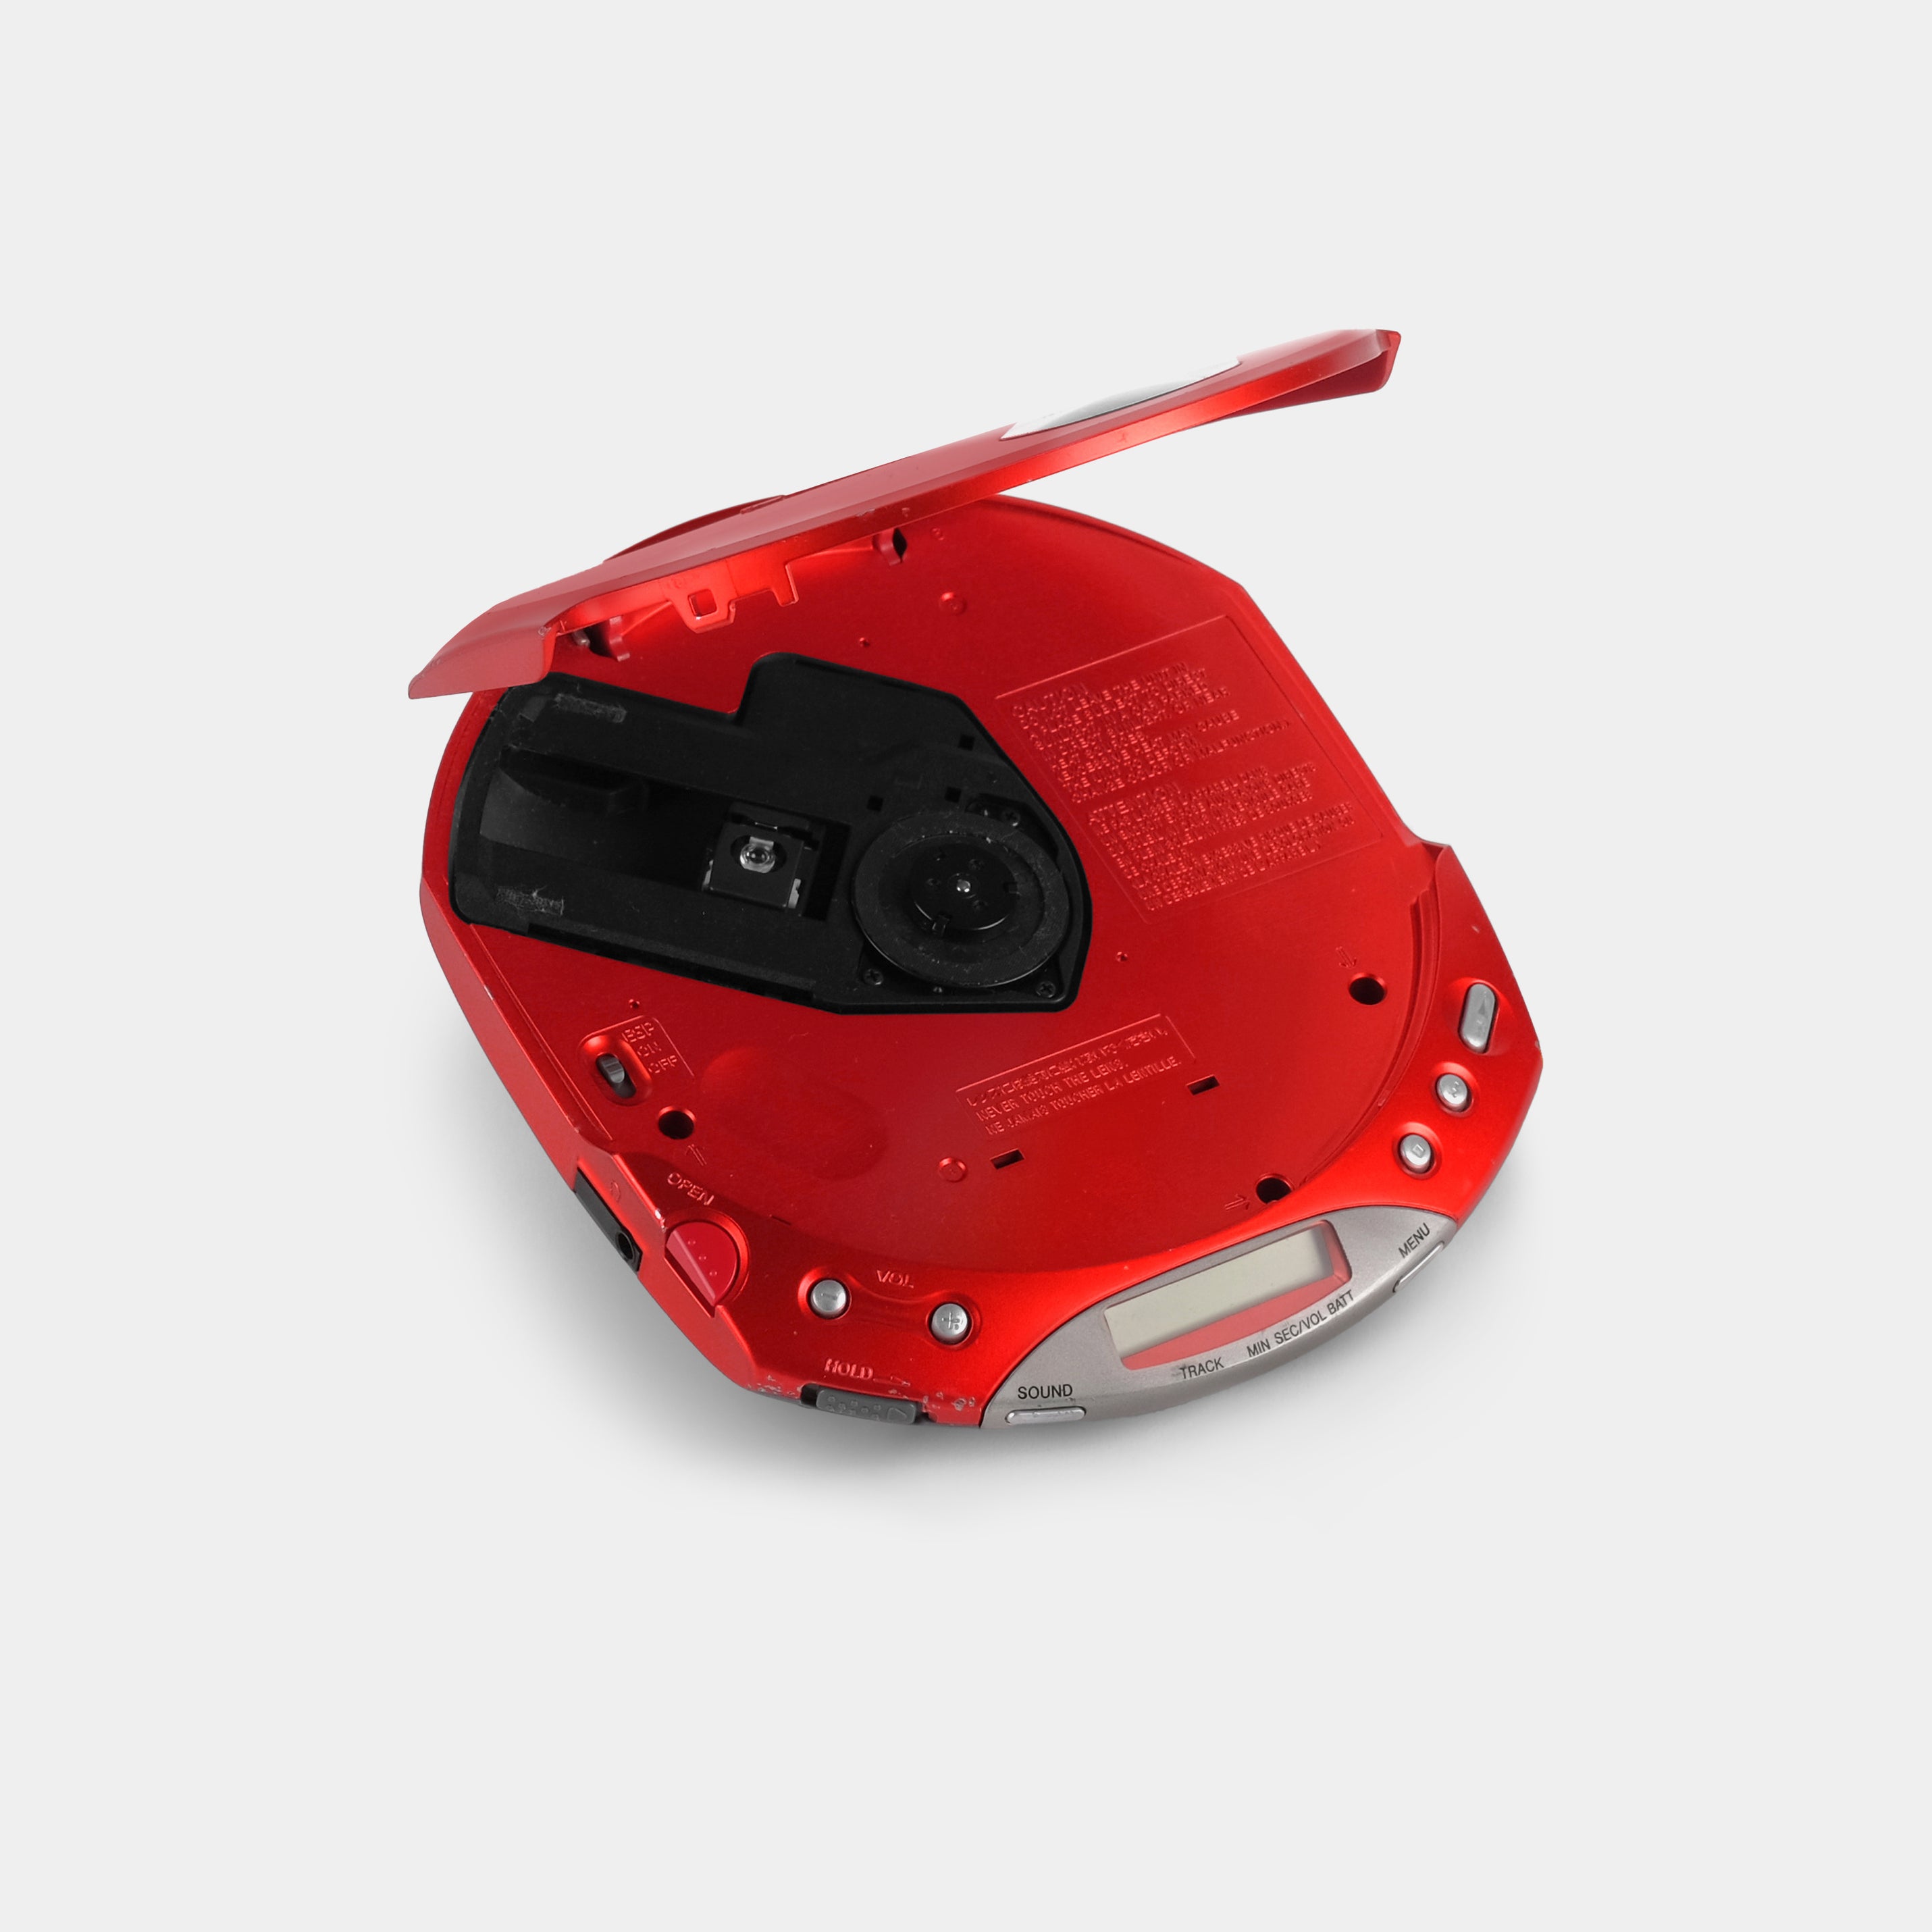 Sony Walkman D-E350 Red Portable CD Player